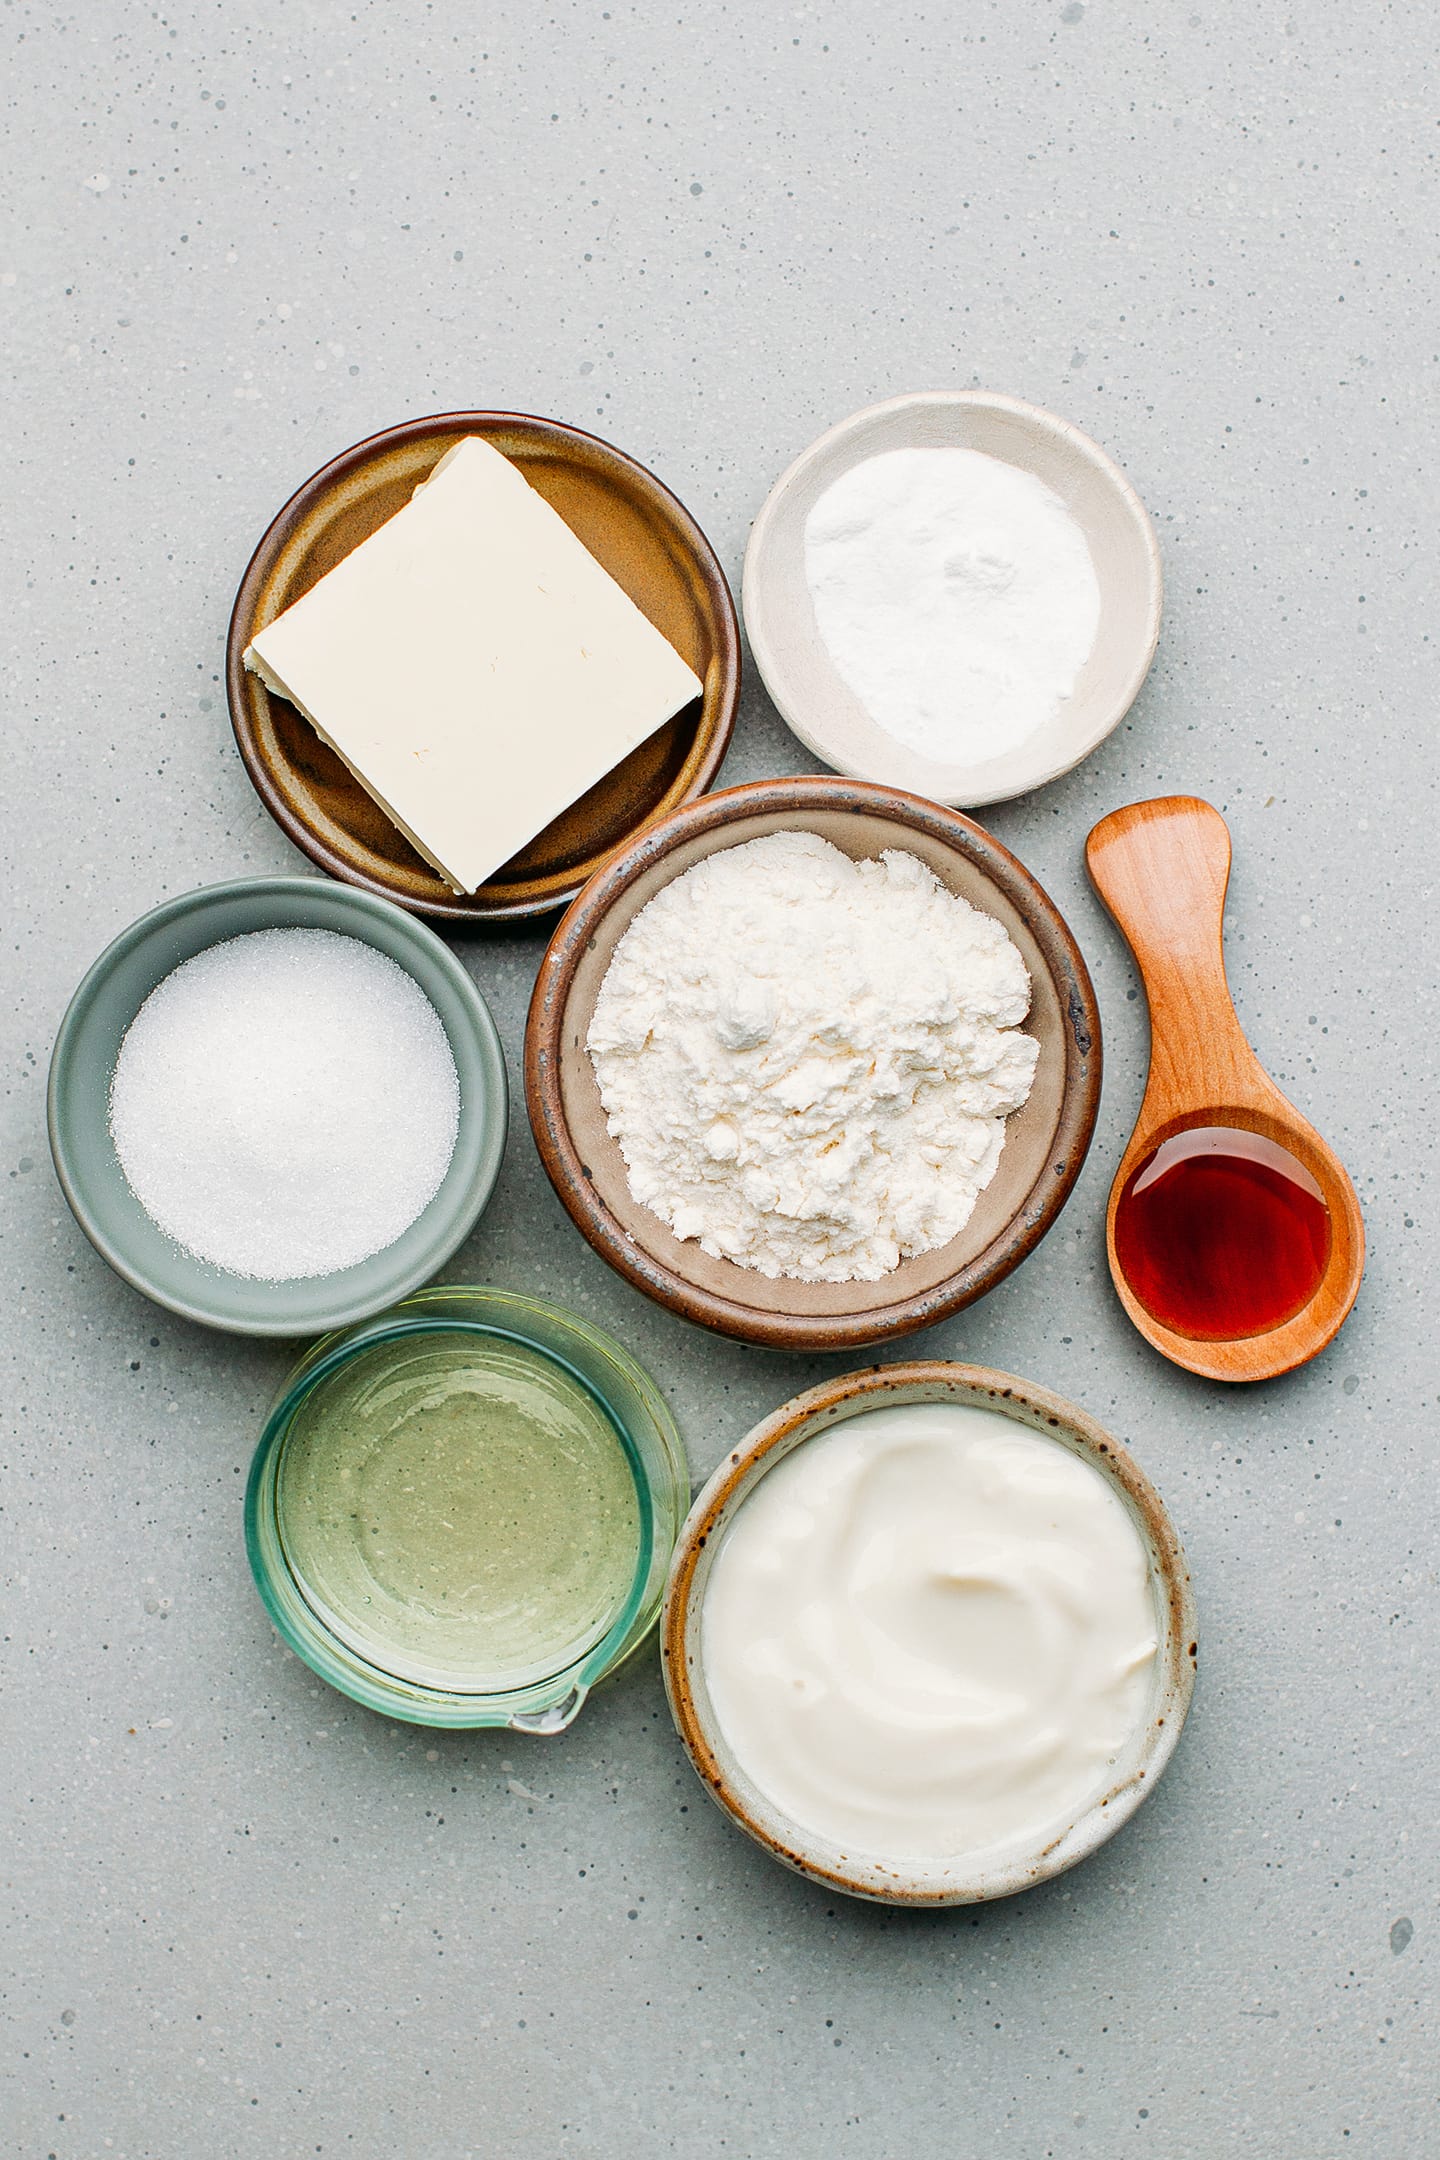 Ingredients like flour, butter, yogurt, oil, and sugar.